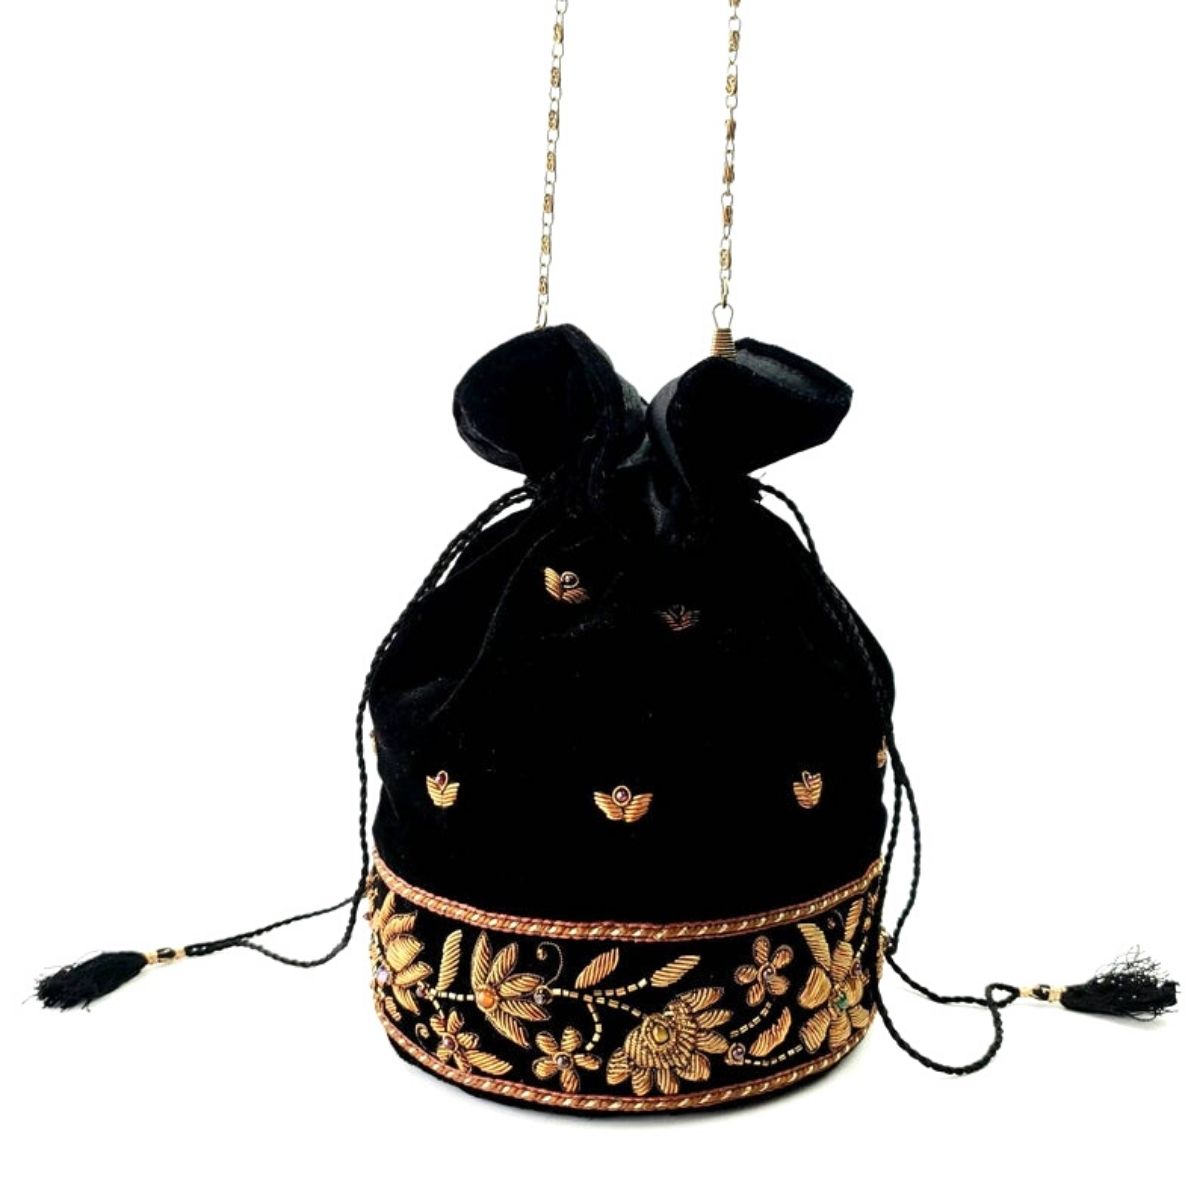 Indian potli bag, wrist bag, bucket bag, hand embroidered velvet